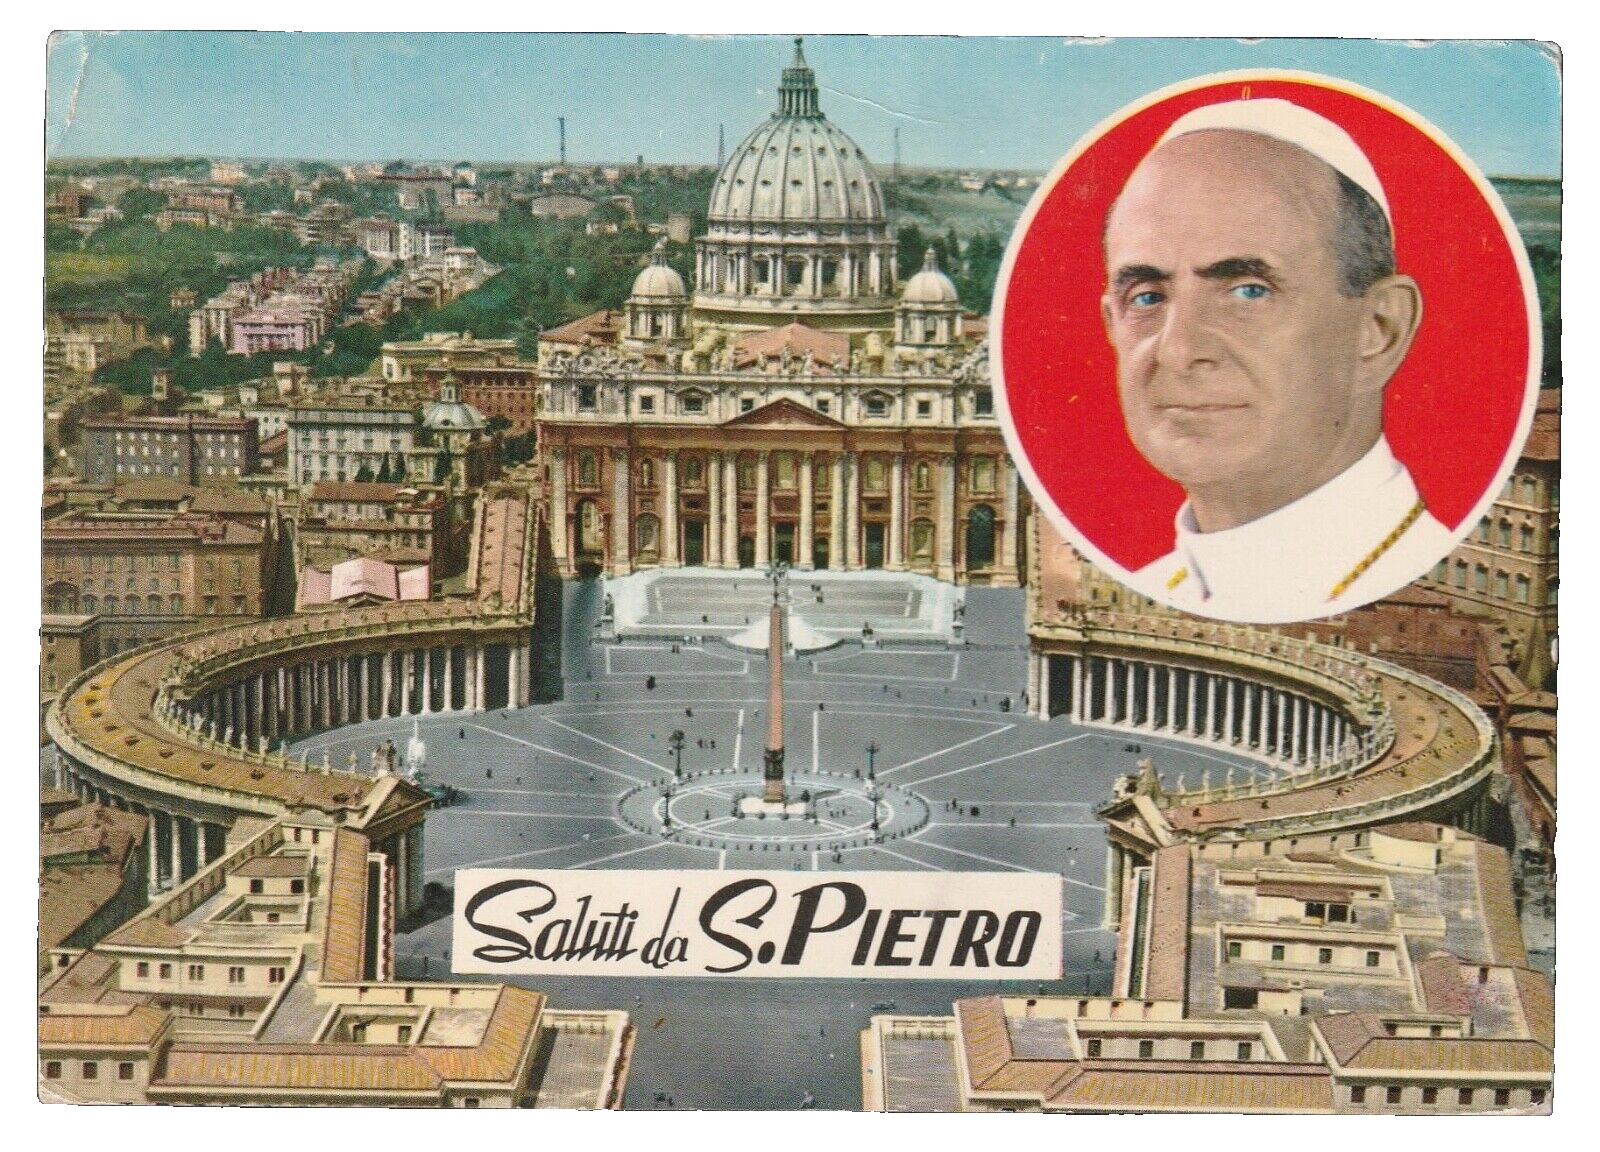 Saluti dal S. Pietro Italy Postcard Postmark 1964.